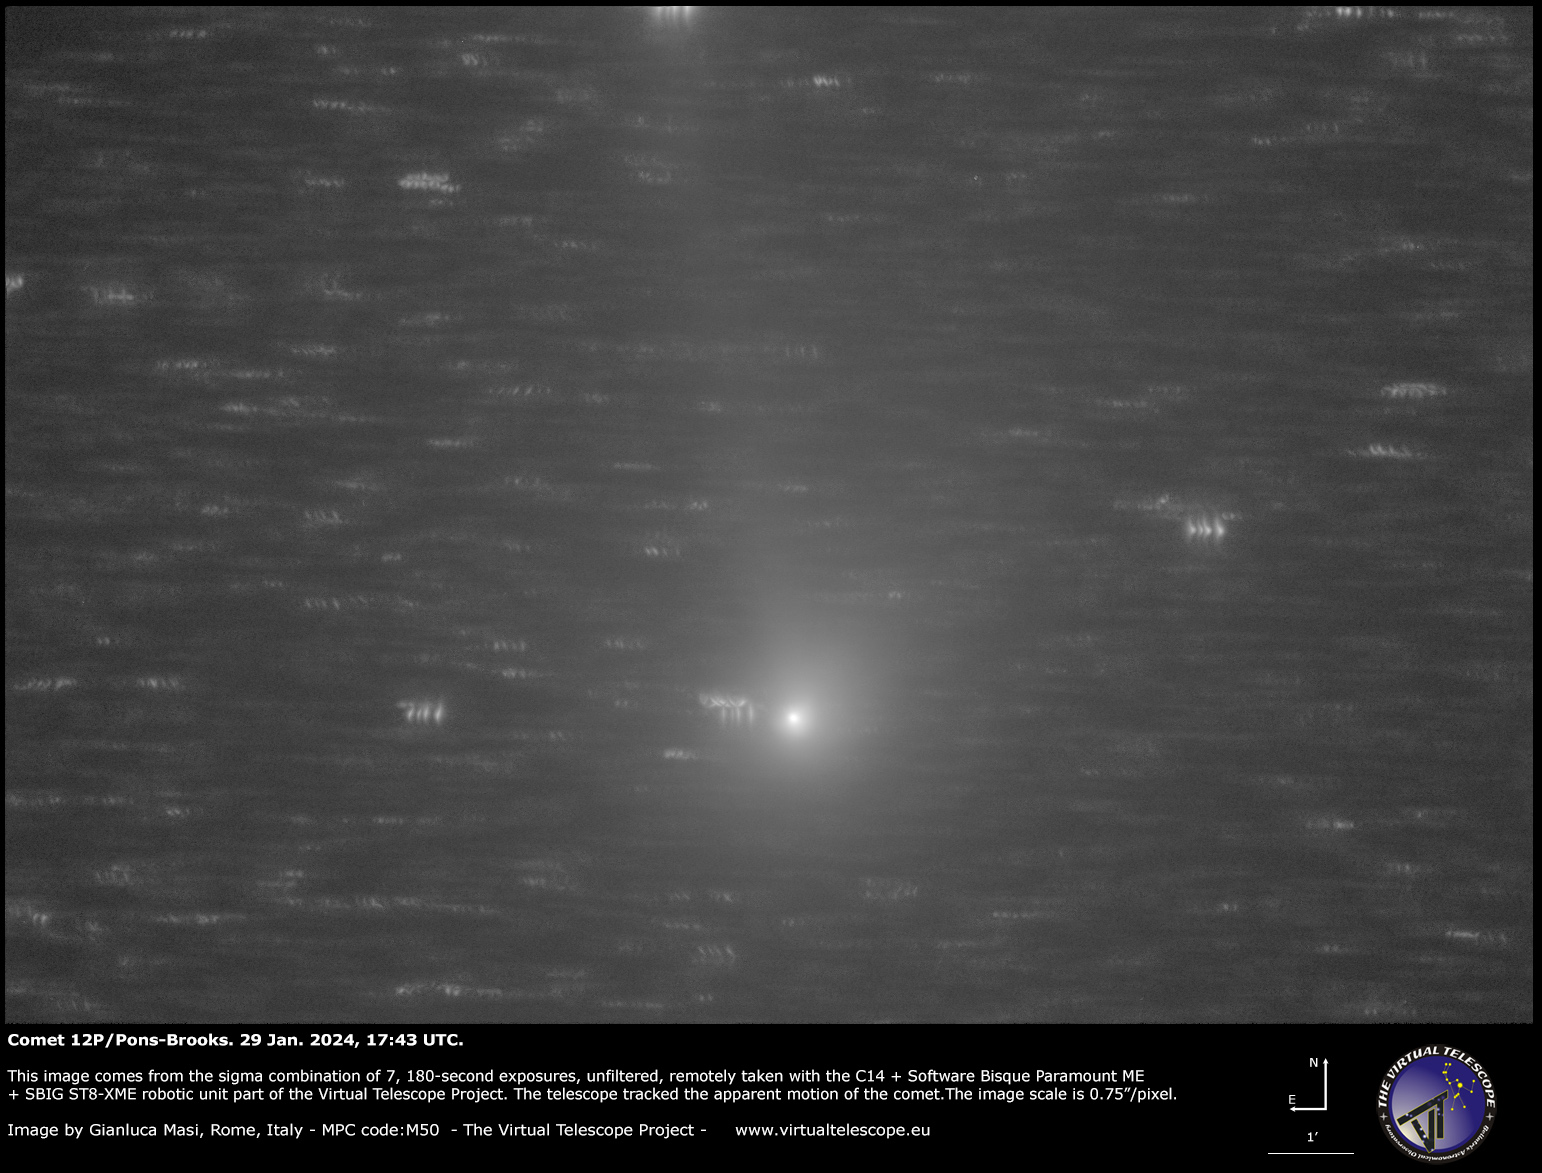 Comet 12P/Pons-Brooks: 29 Jan. 2024.